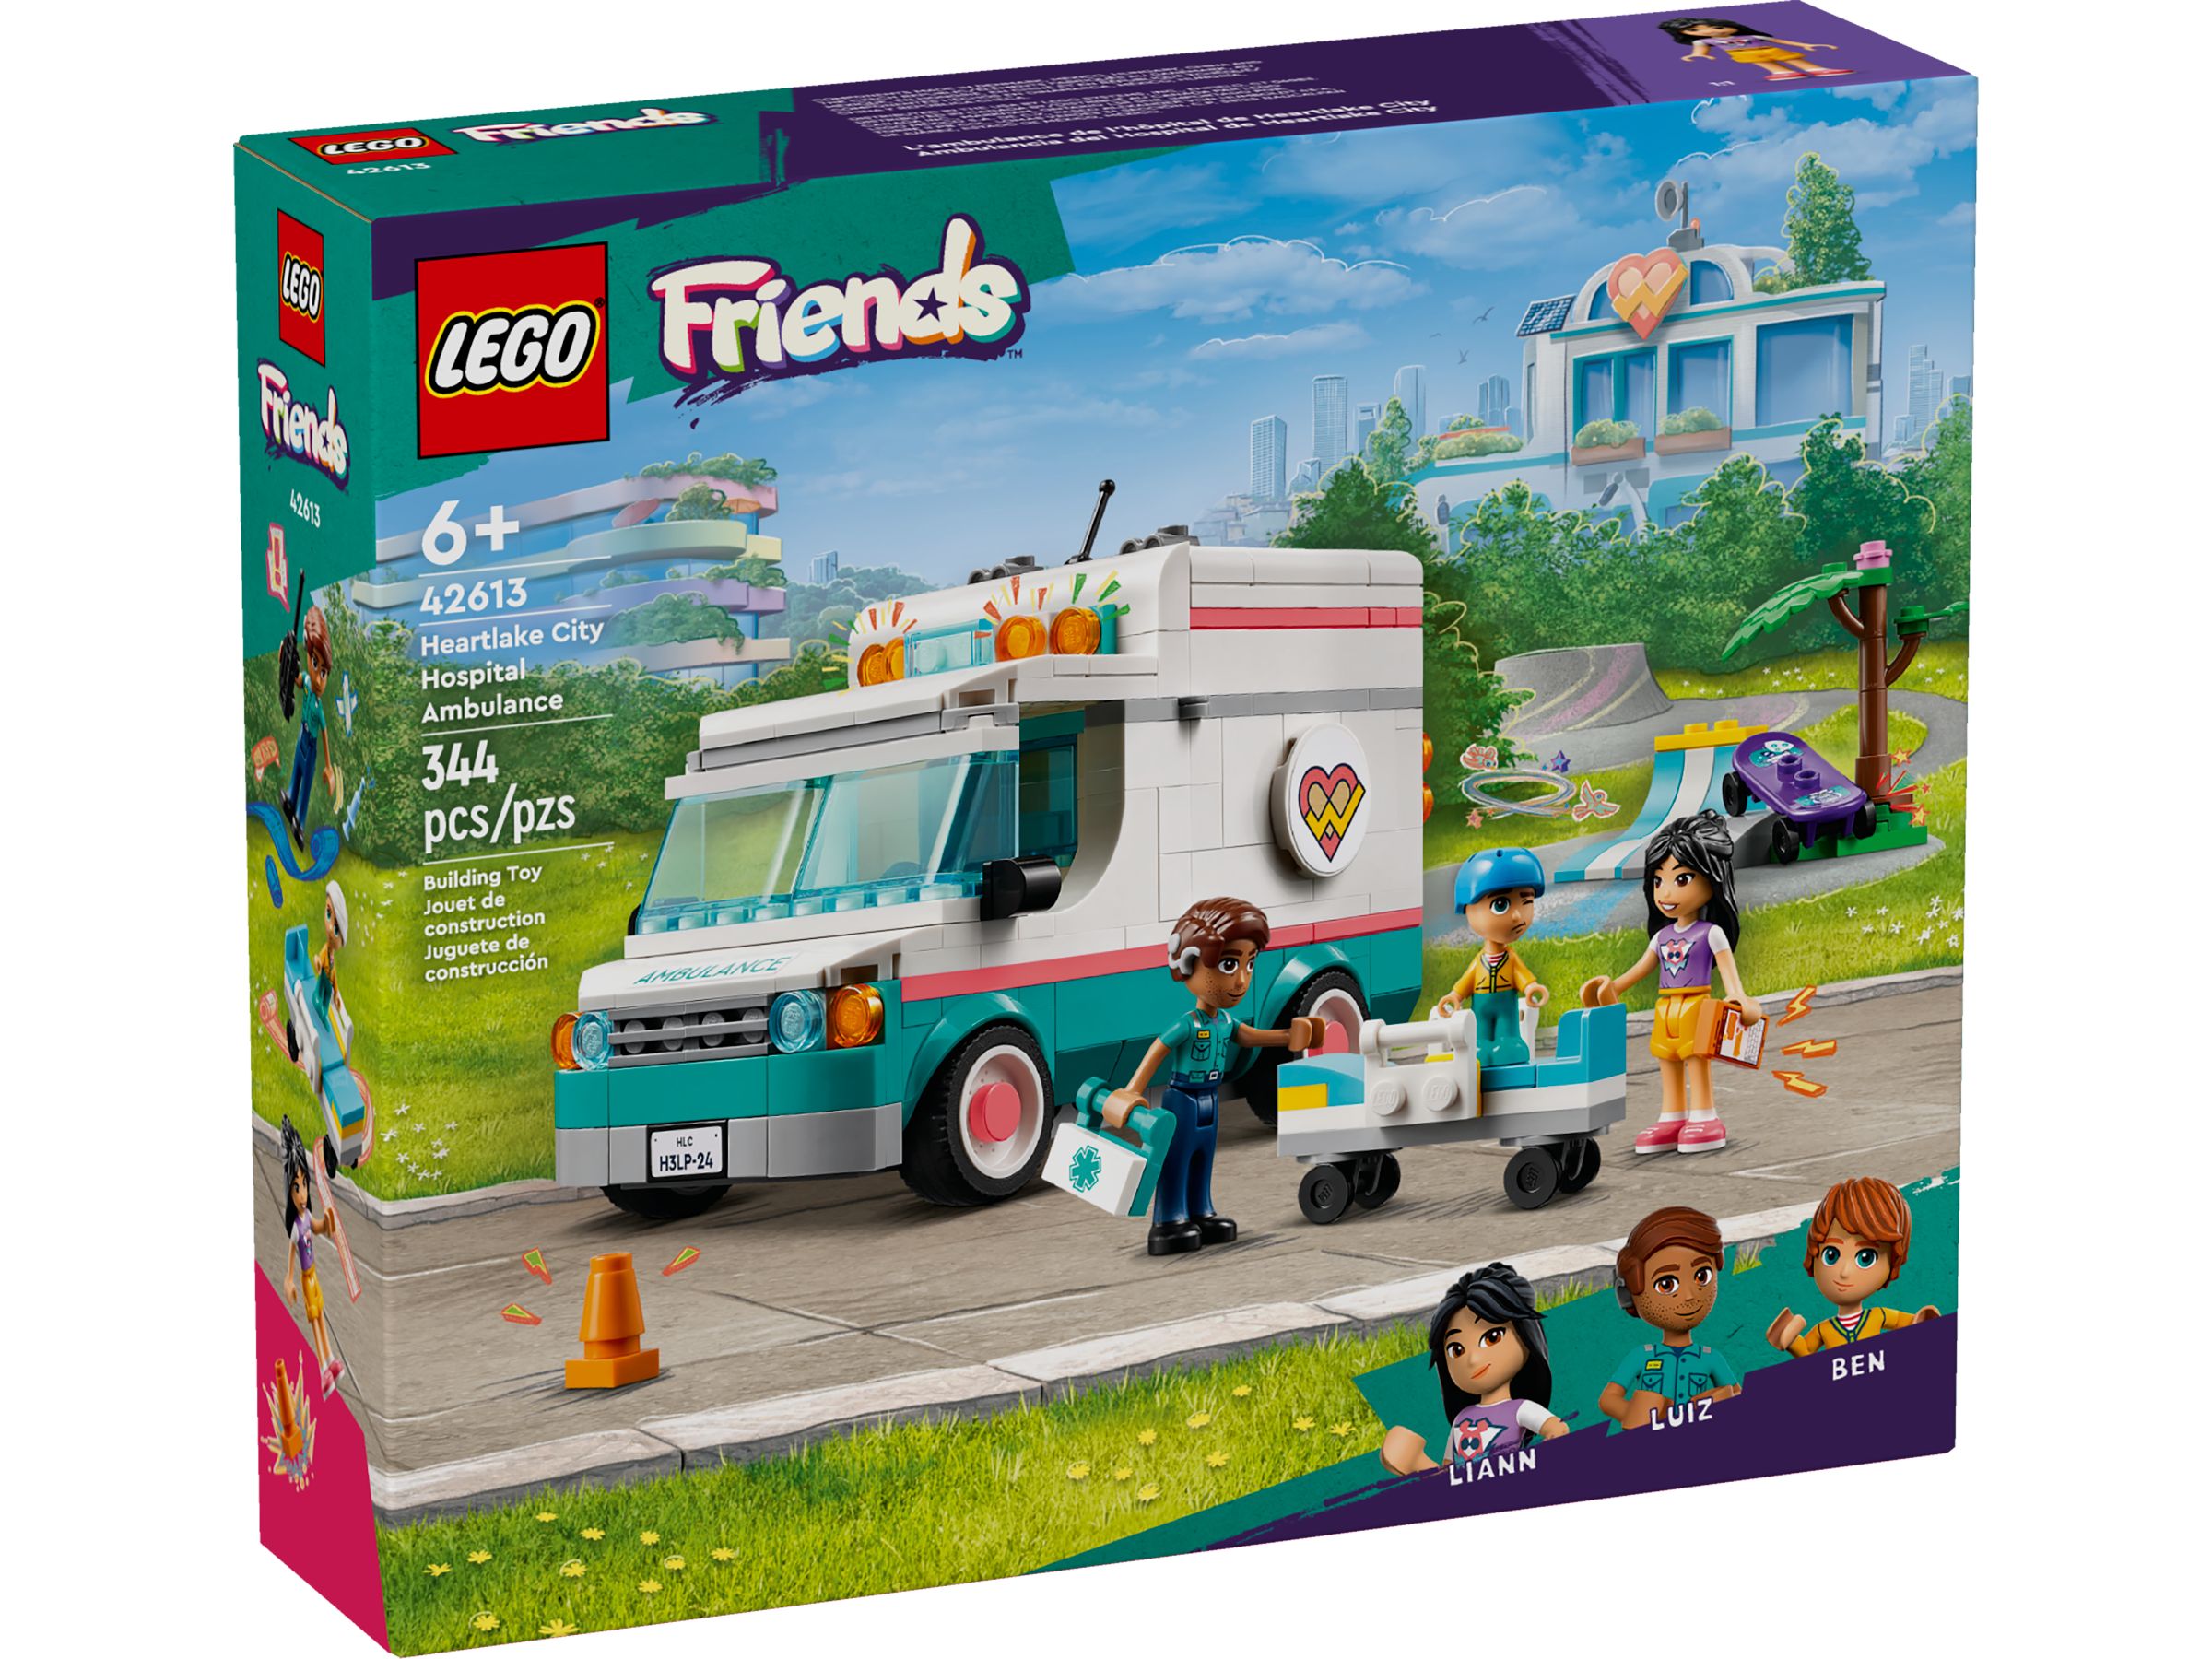 LEGO Friends 42613 Heartlake City Rettungswagen LEGO_42613_Box1_v39.jpg